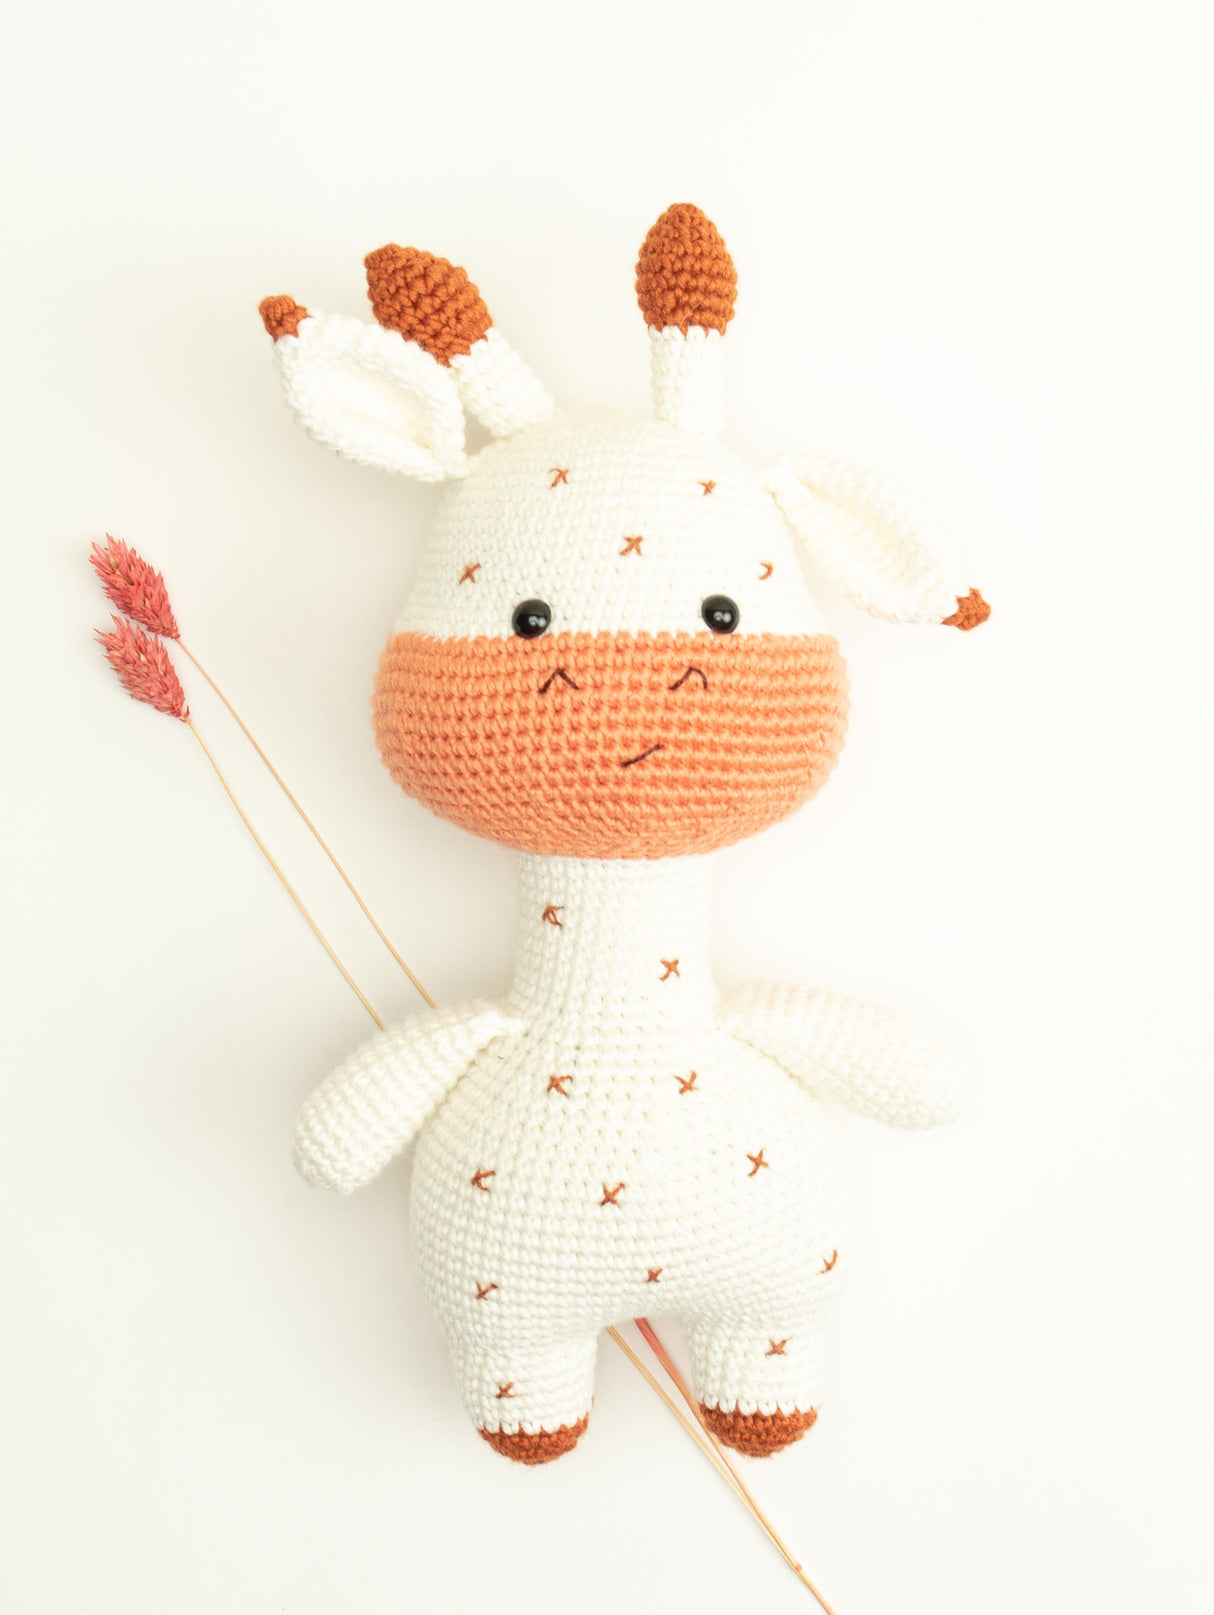 Crochet Doll - Gio the giraffe by Little Moy